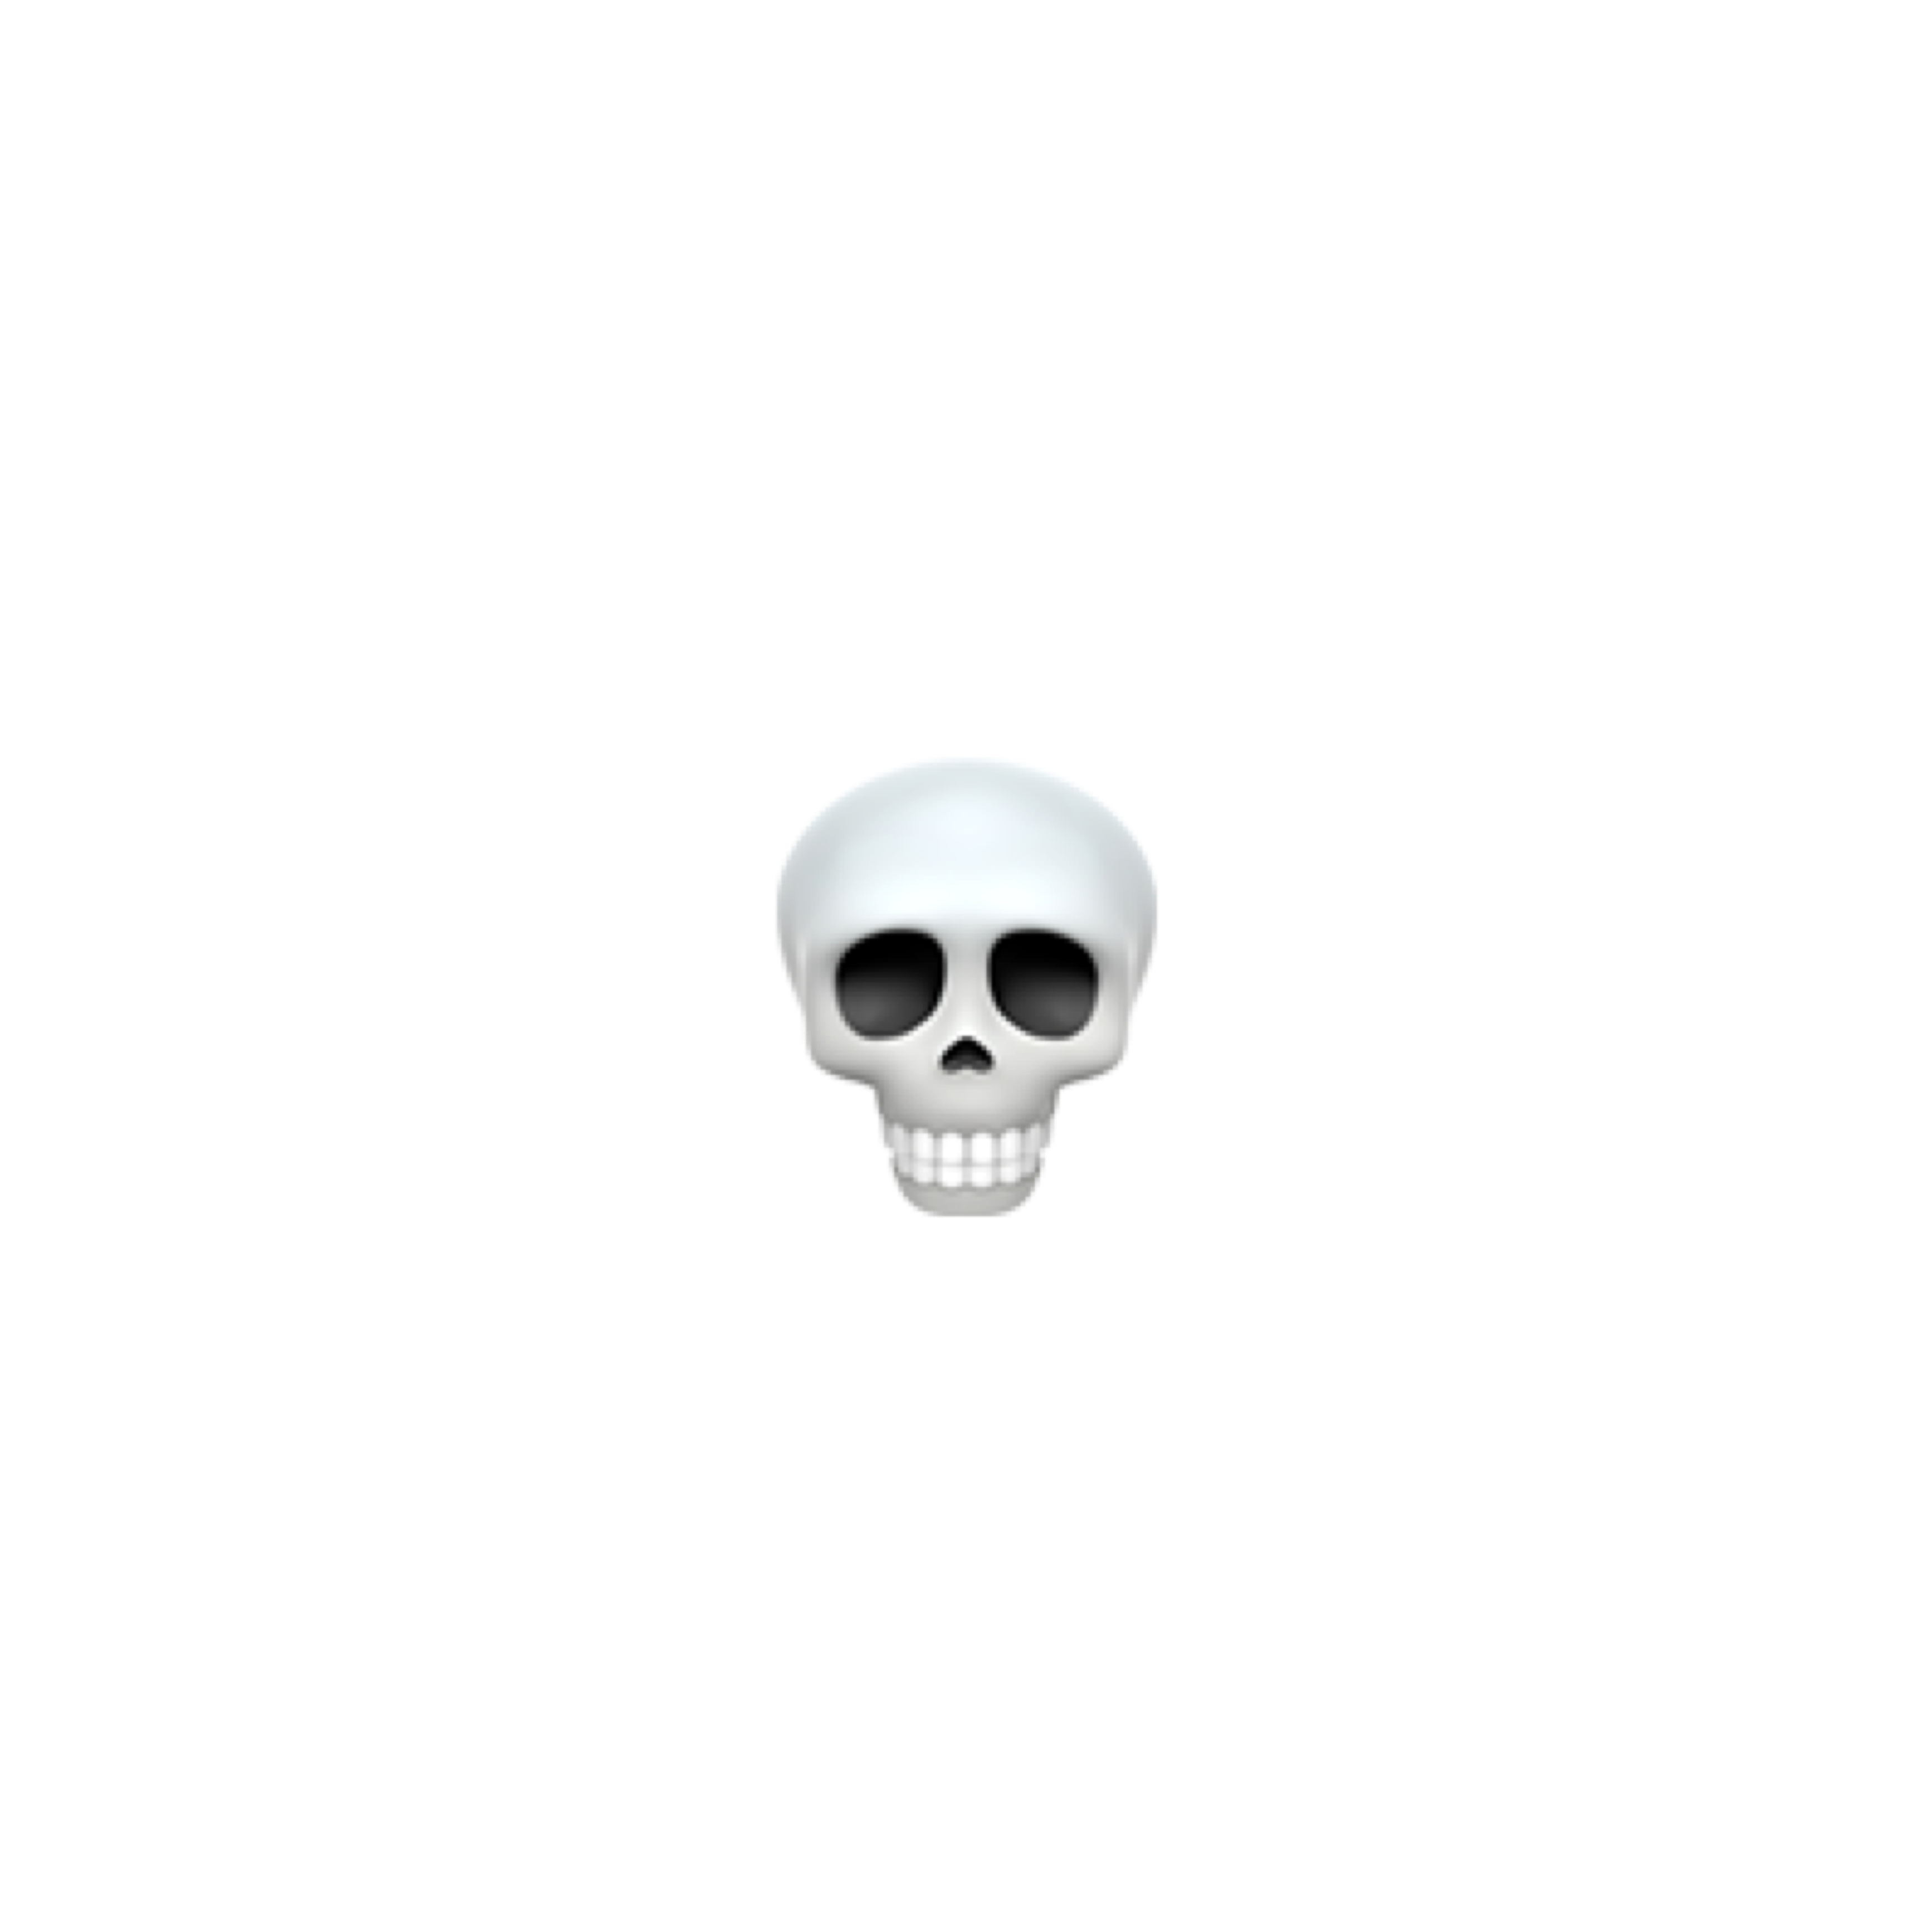 Skull Emoji PNG Image Transparent Free Download